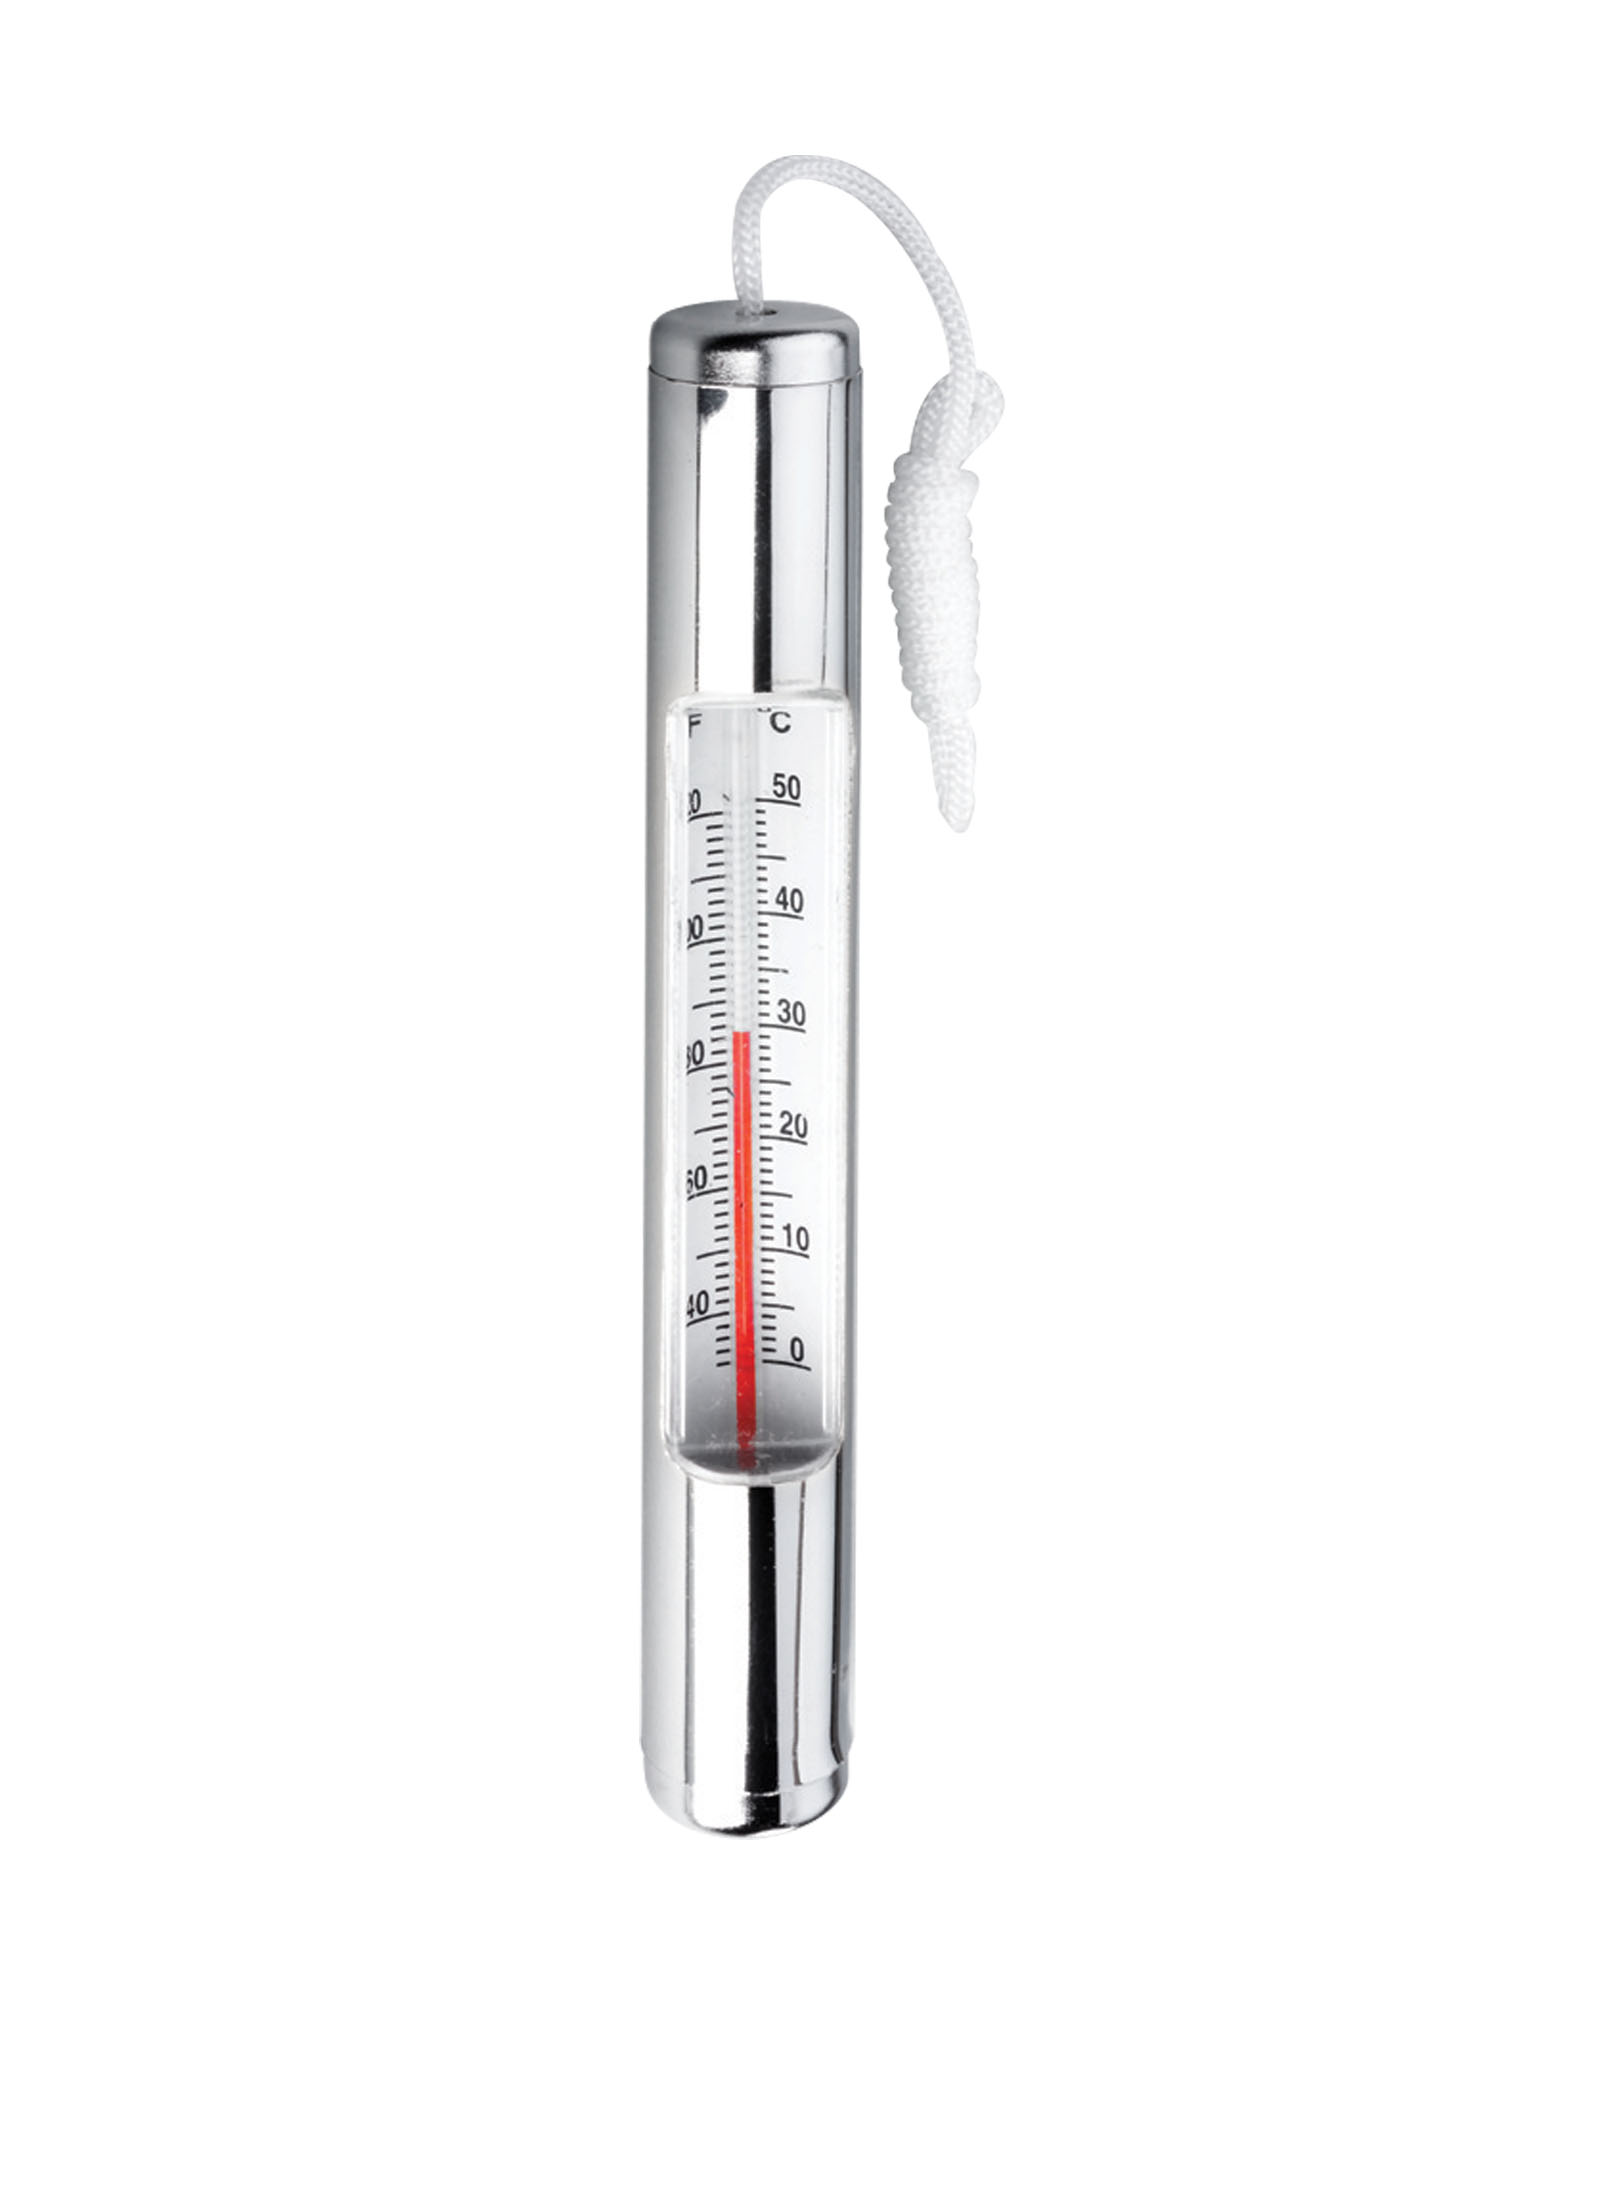 Thermometer Chrome Plated 150025PT - VINYL REPAIR KITS